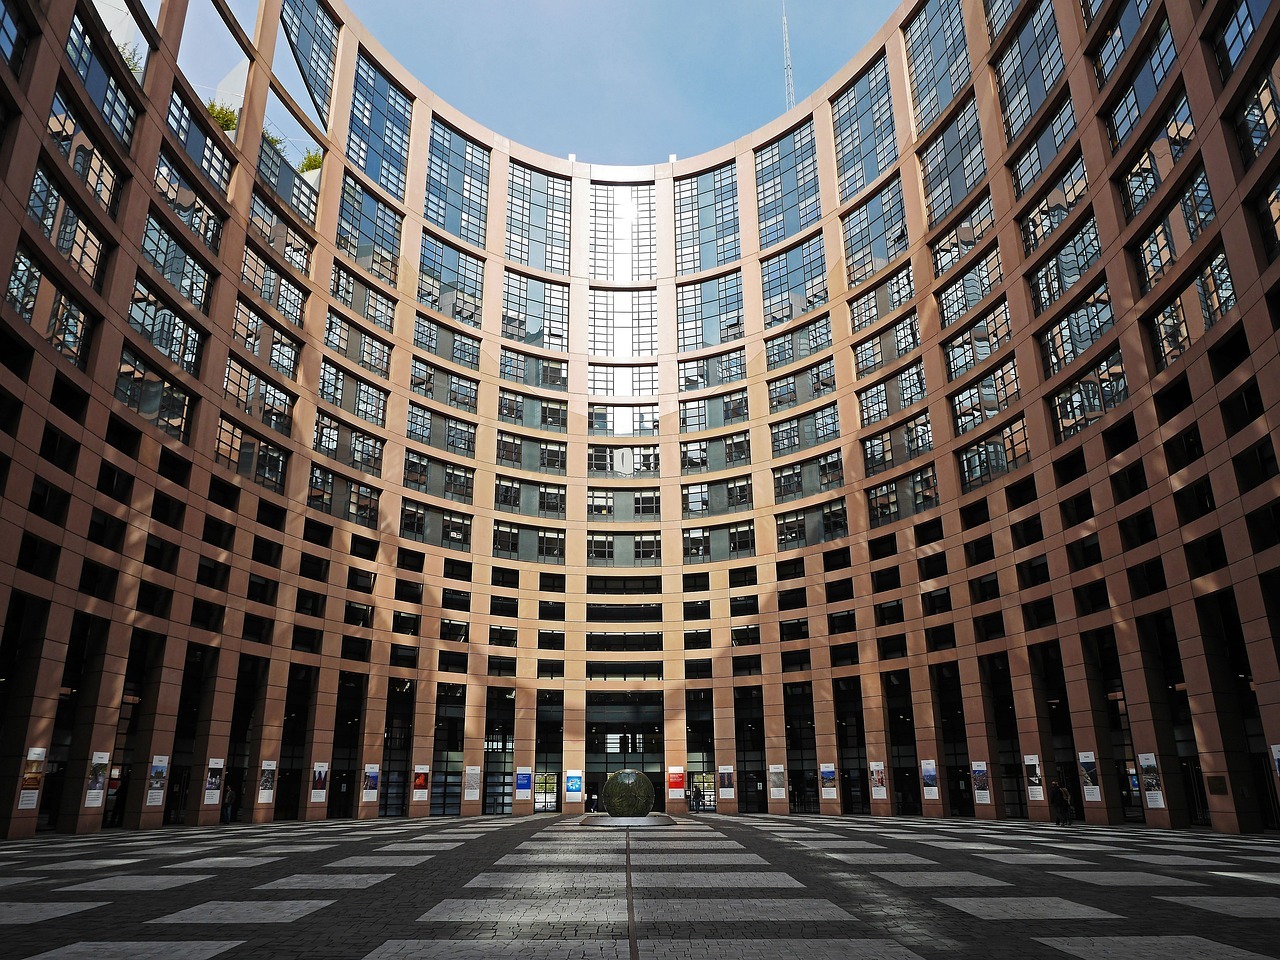 Fot. european-parliament-1265254_1280 pixabay